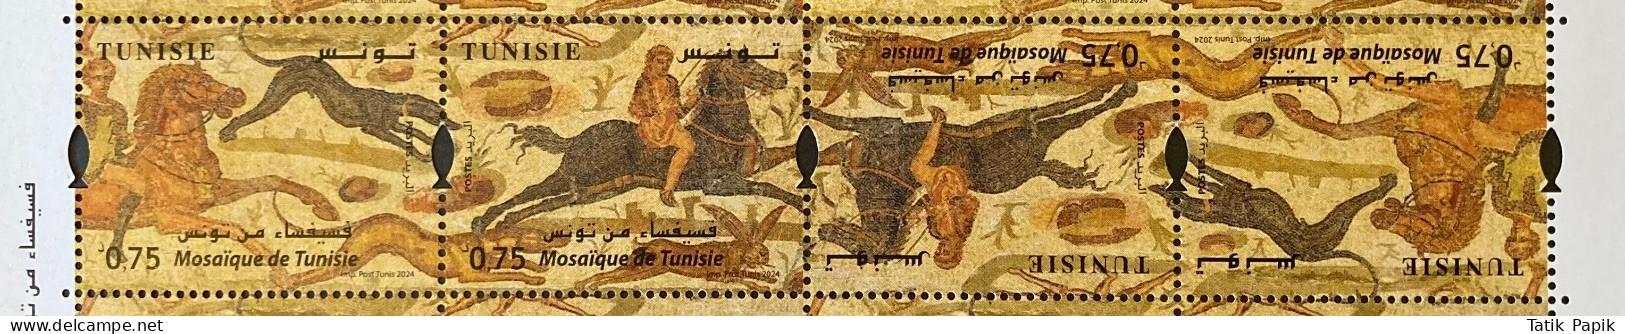 2024 Tunisie Tunisia Mosaic Horse Dog 2 Pairs Head To Tail Cheval Chevalin Jockey   MNH New - Tunesien (1956-...)